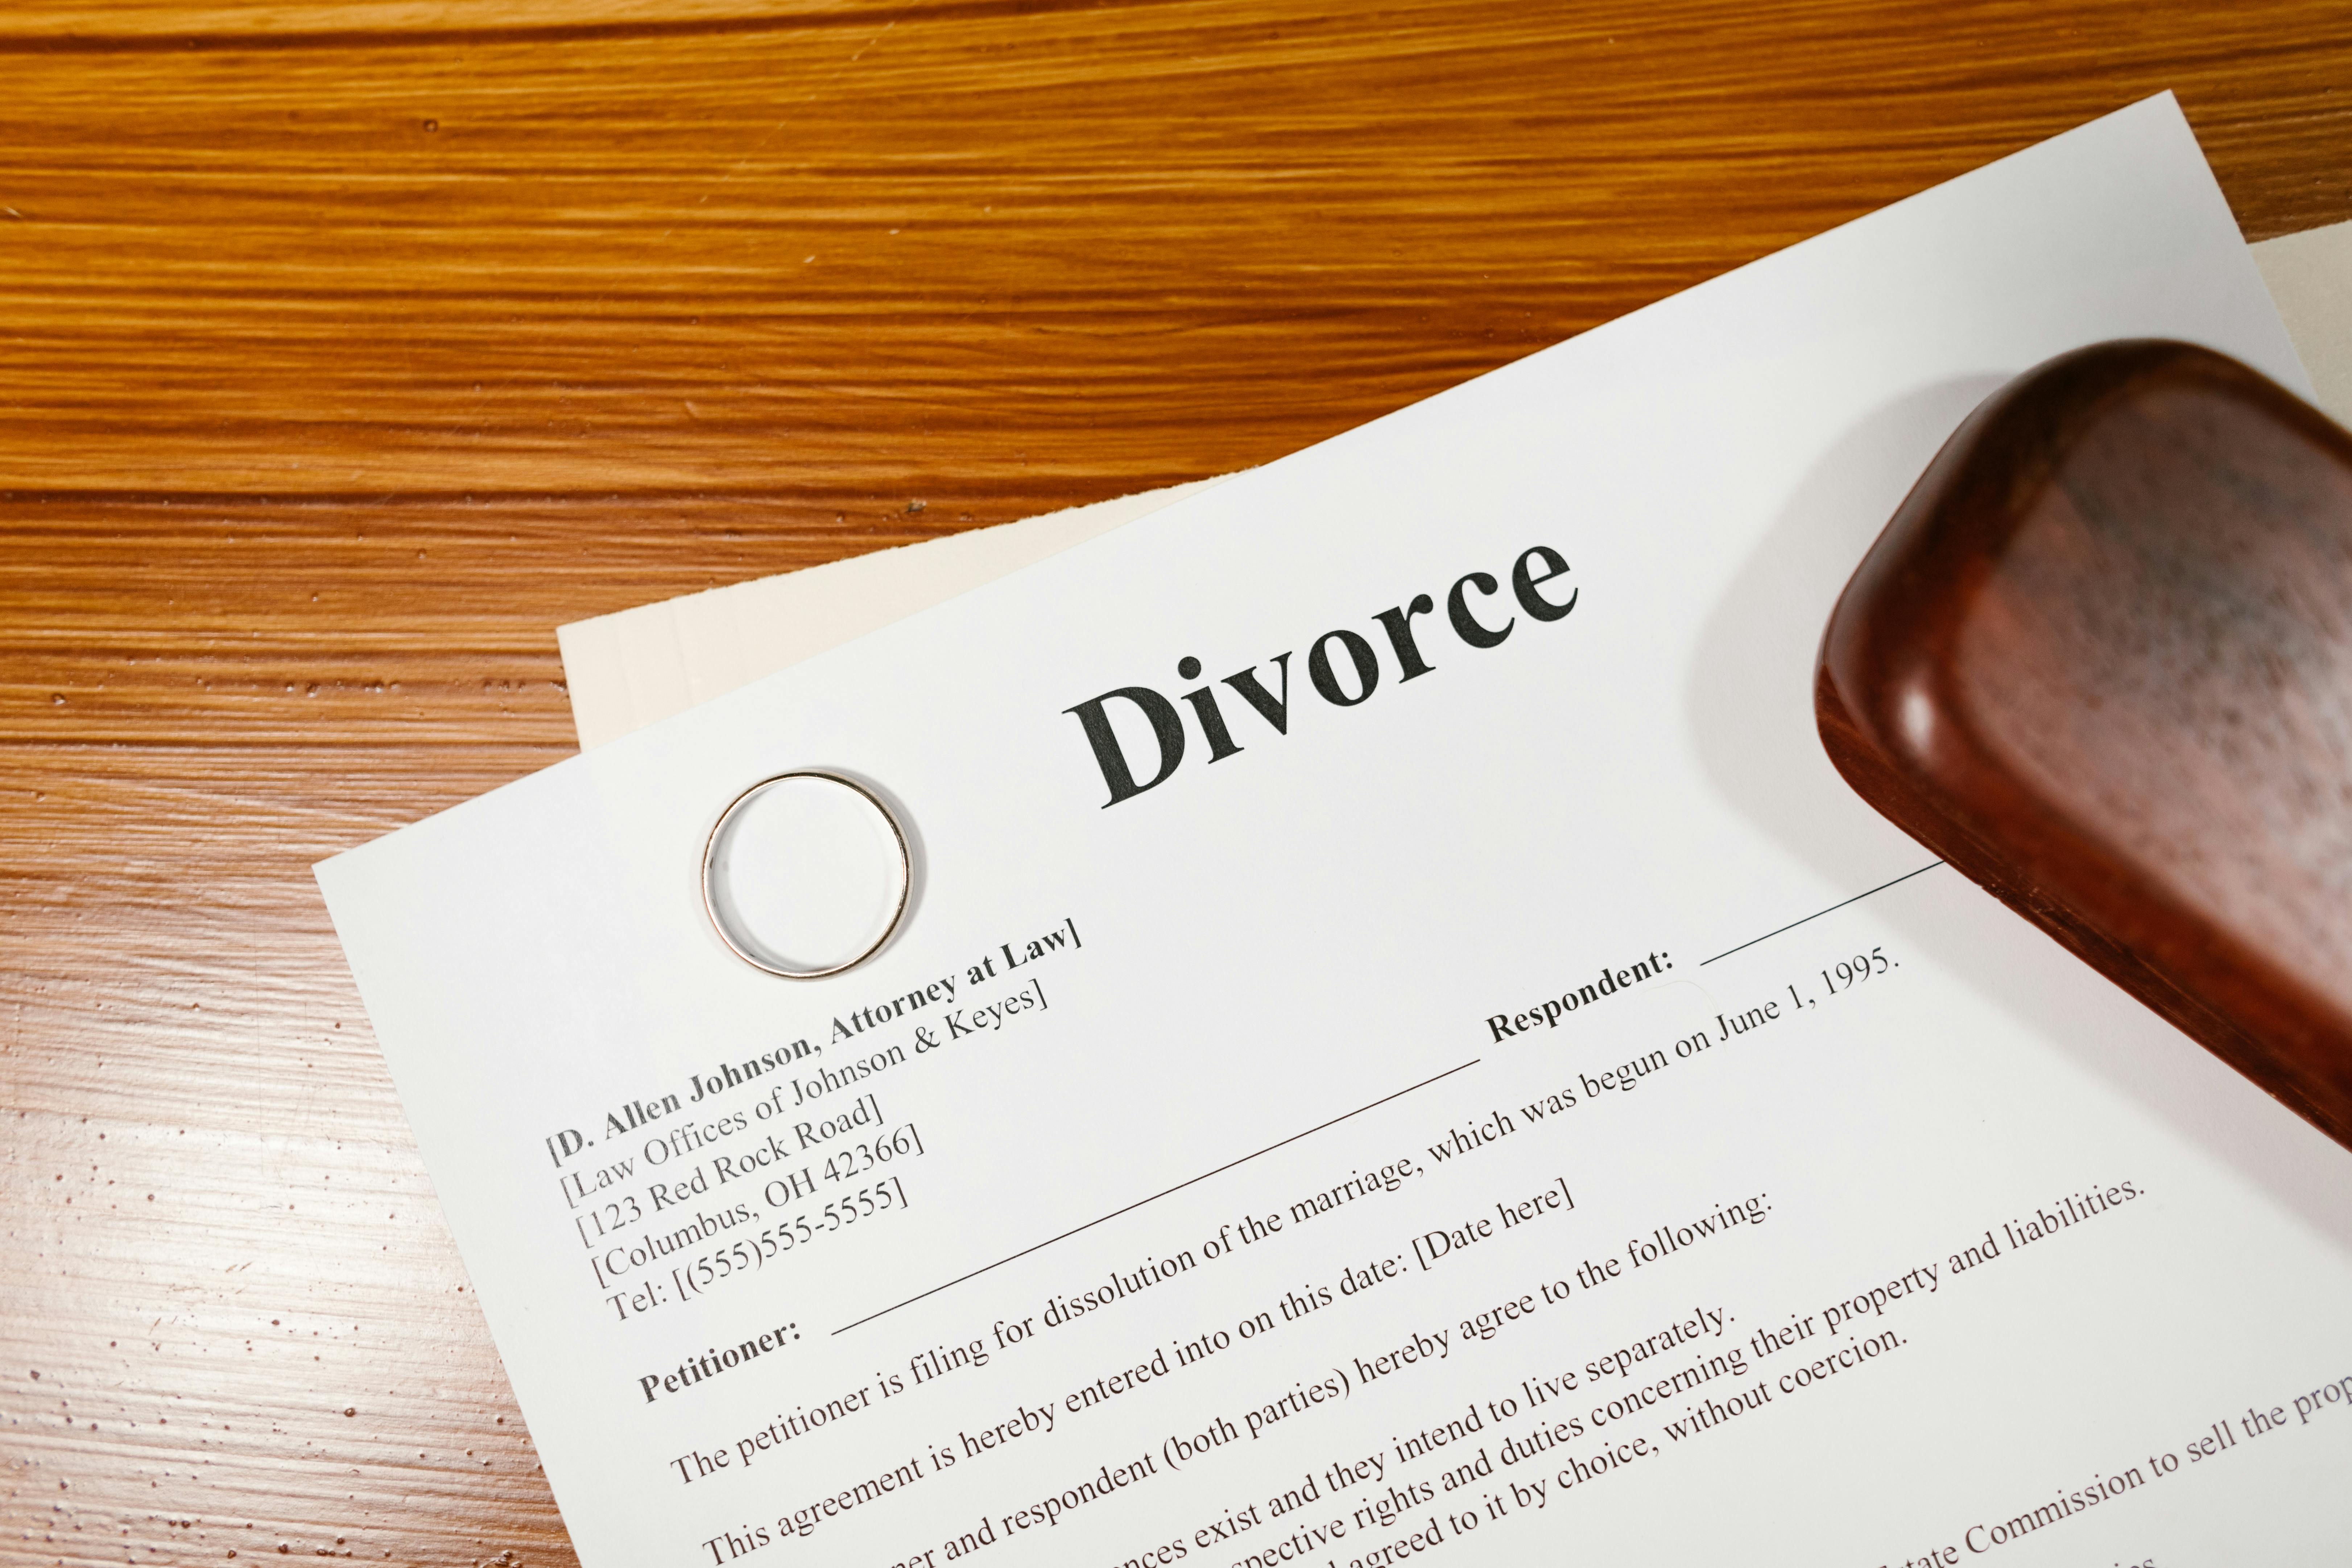 Papiers de divorce | Source : Pexels